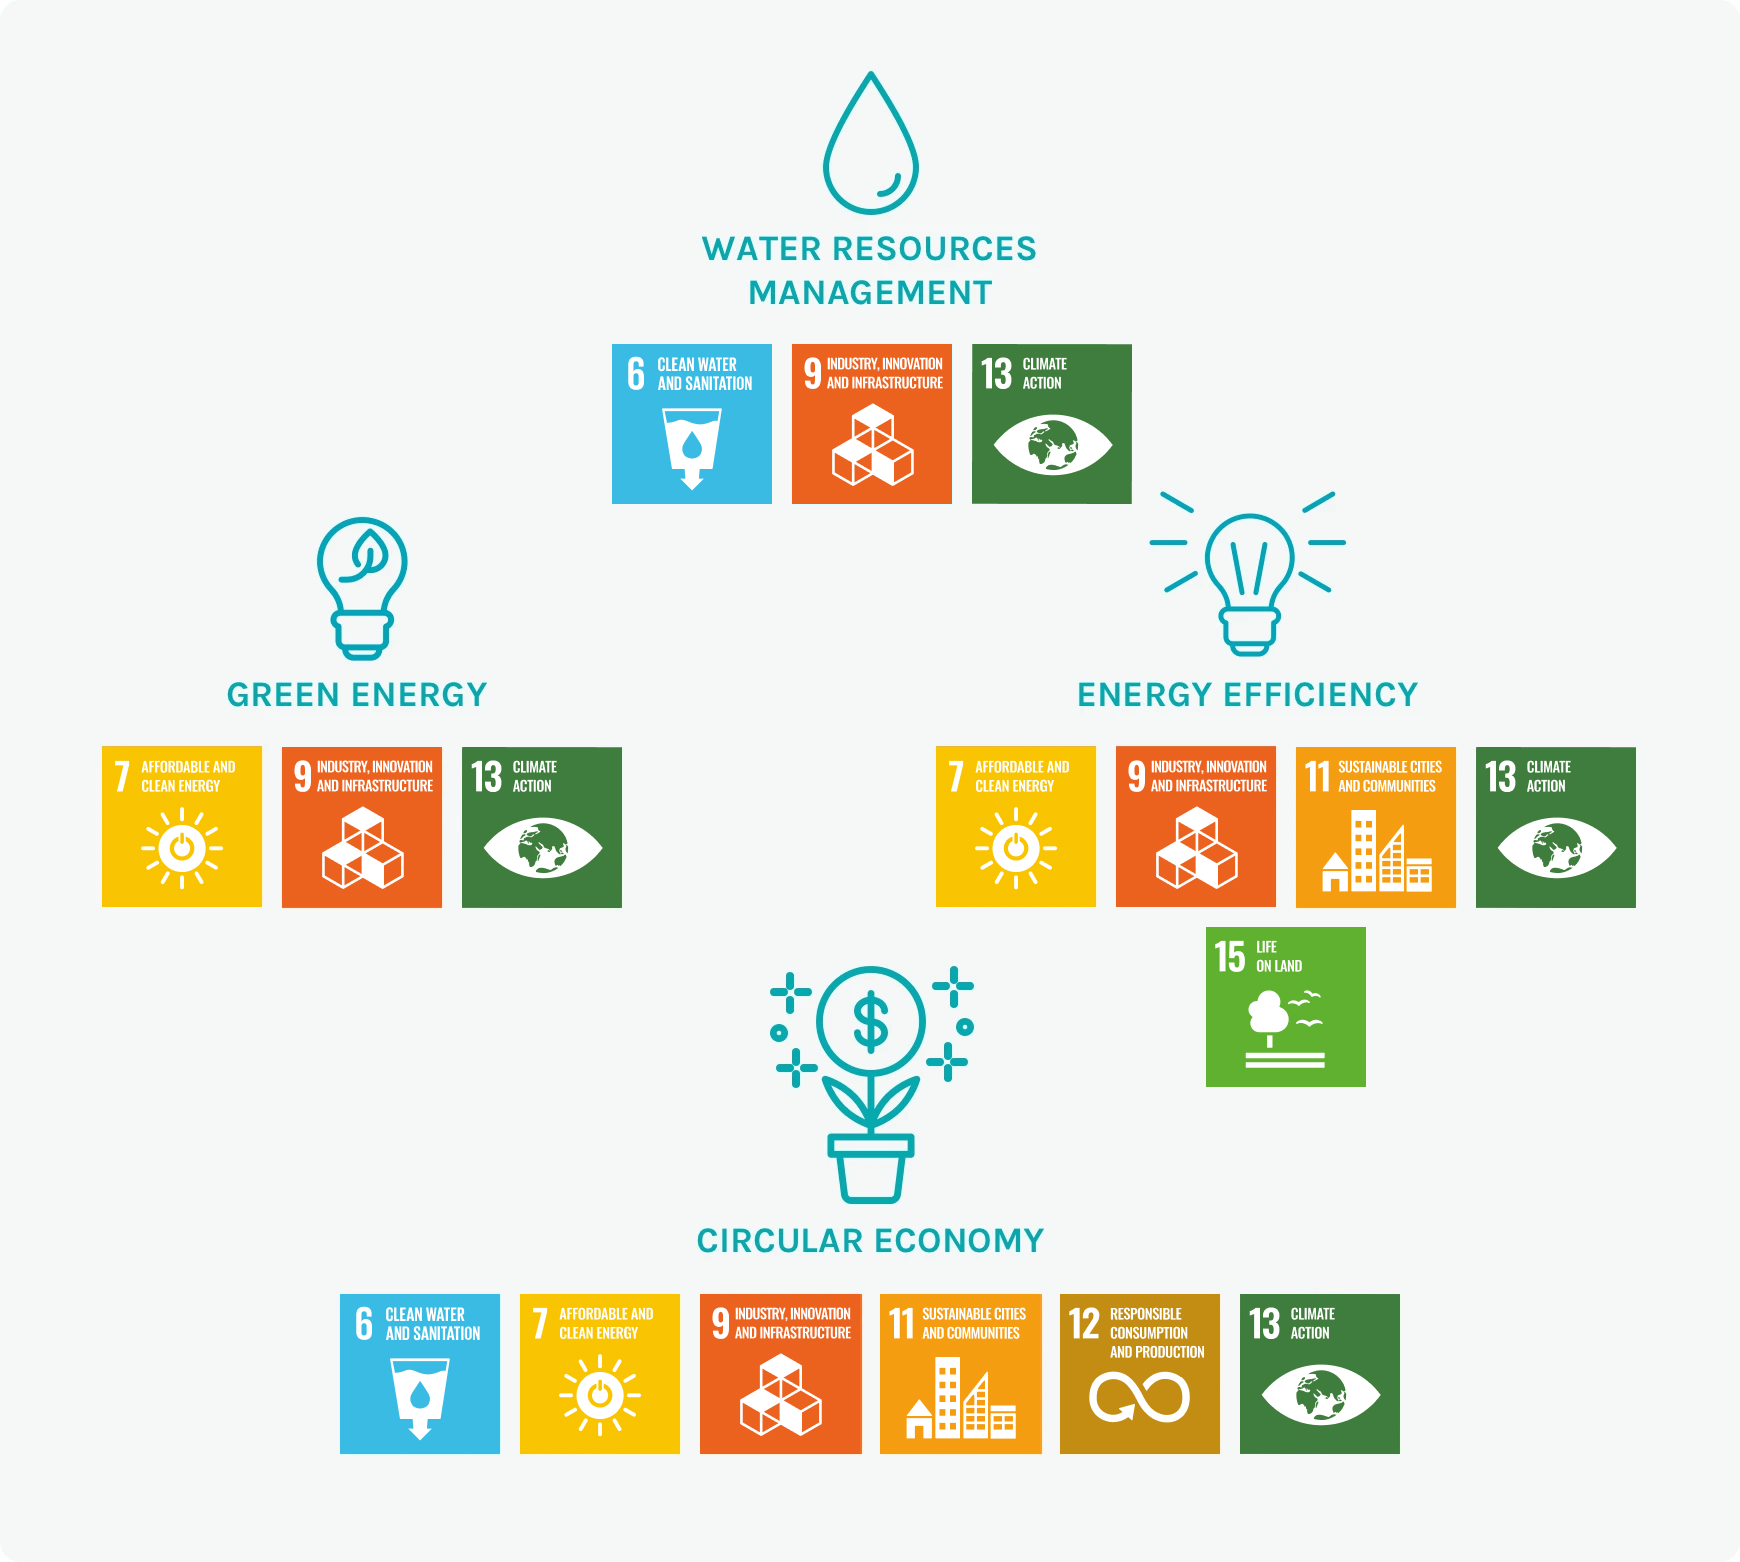 Sustainable development goals (SGDs)